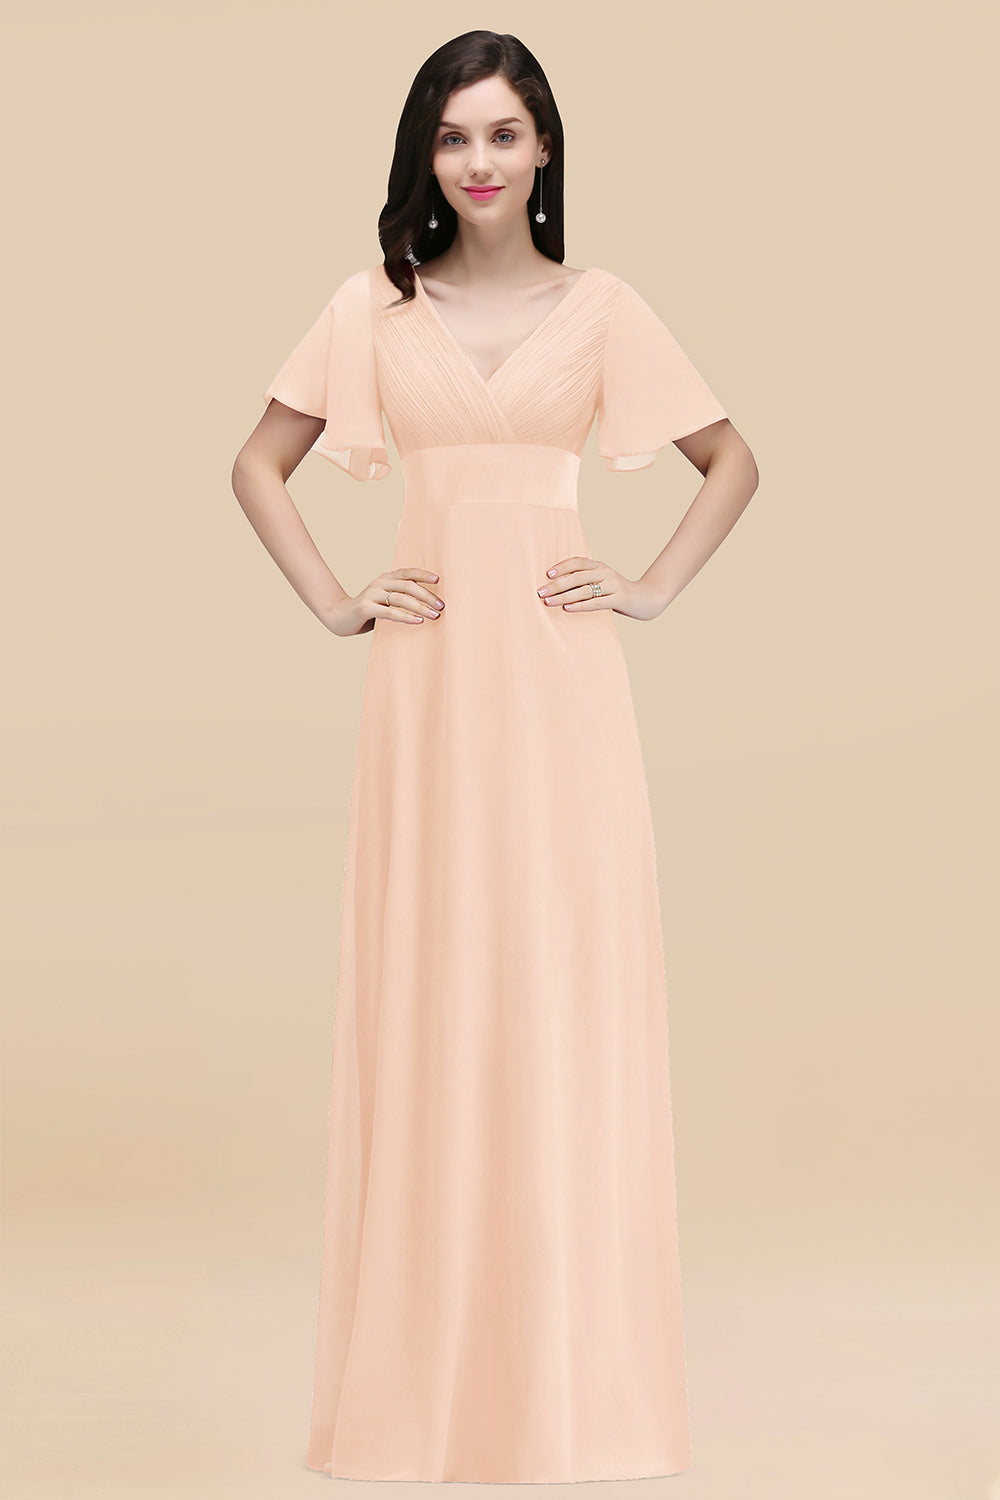 Affordable V-Neck Ruffle Long Burgundy Bridesmaid Dress With Short-Sleeves-27dress